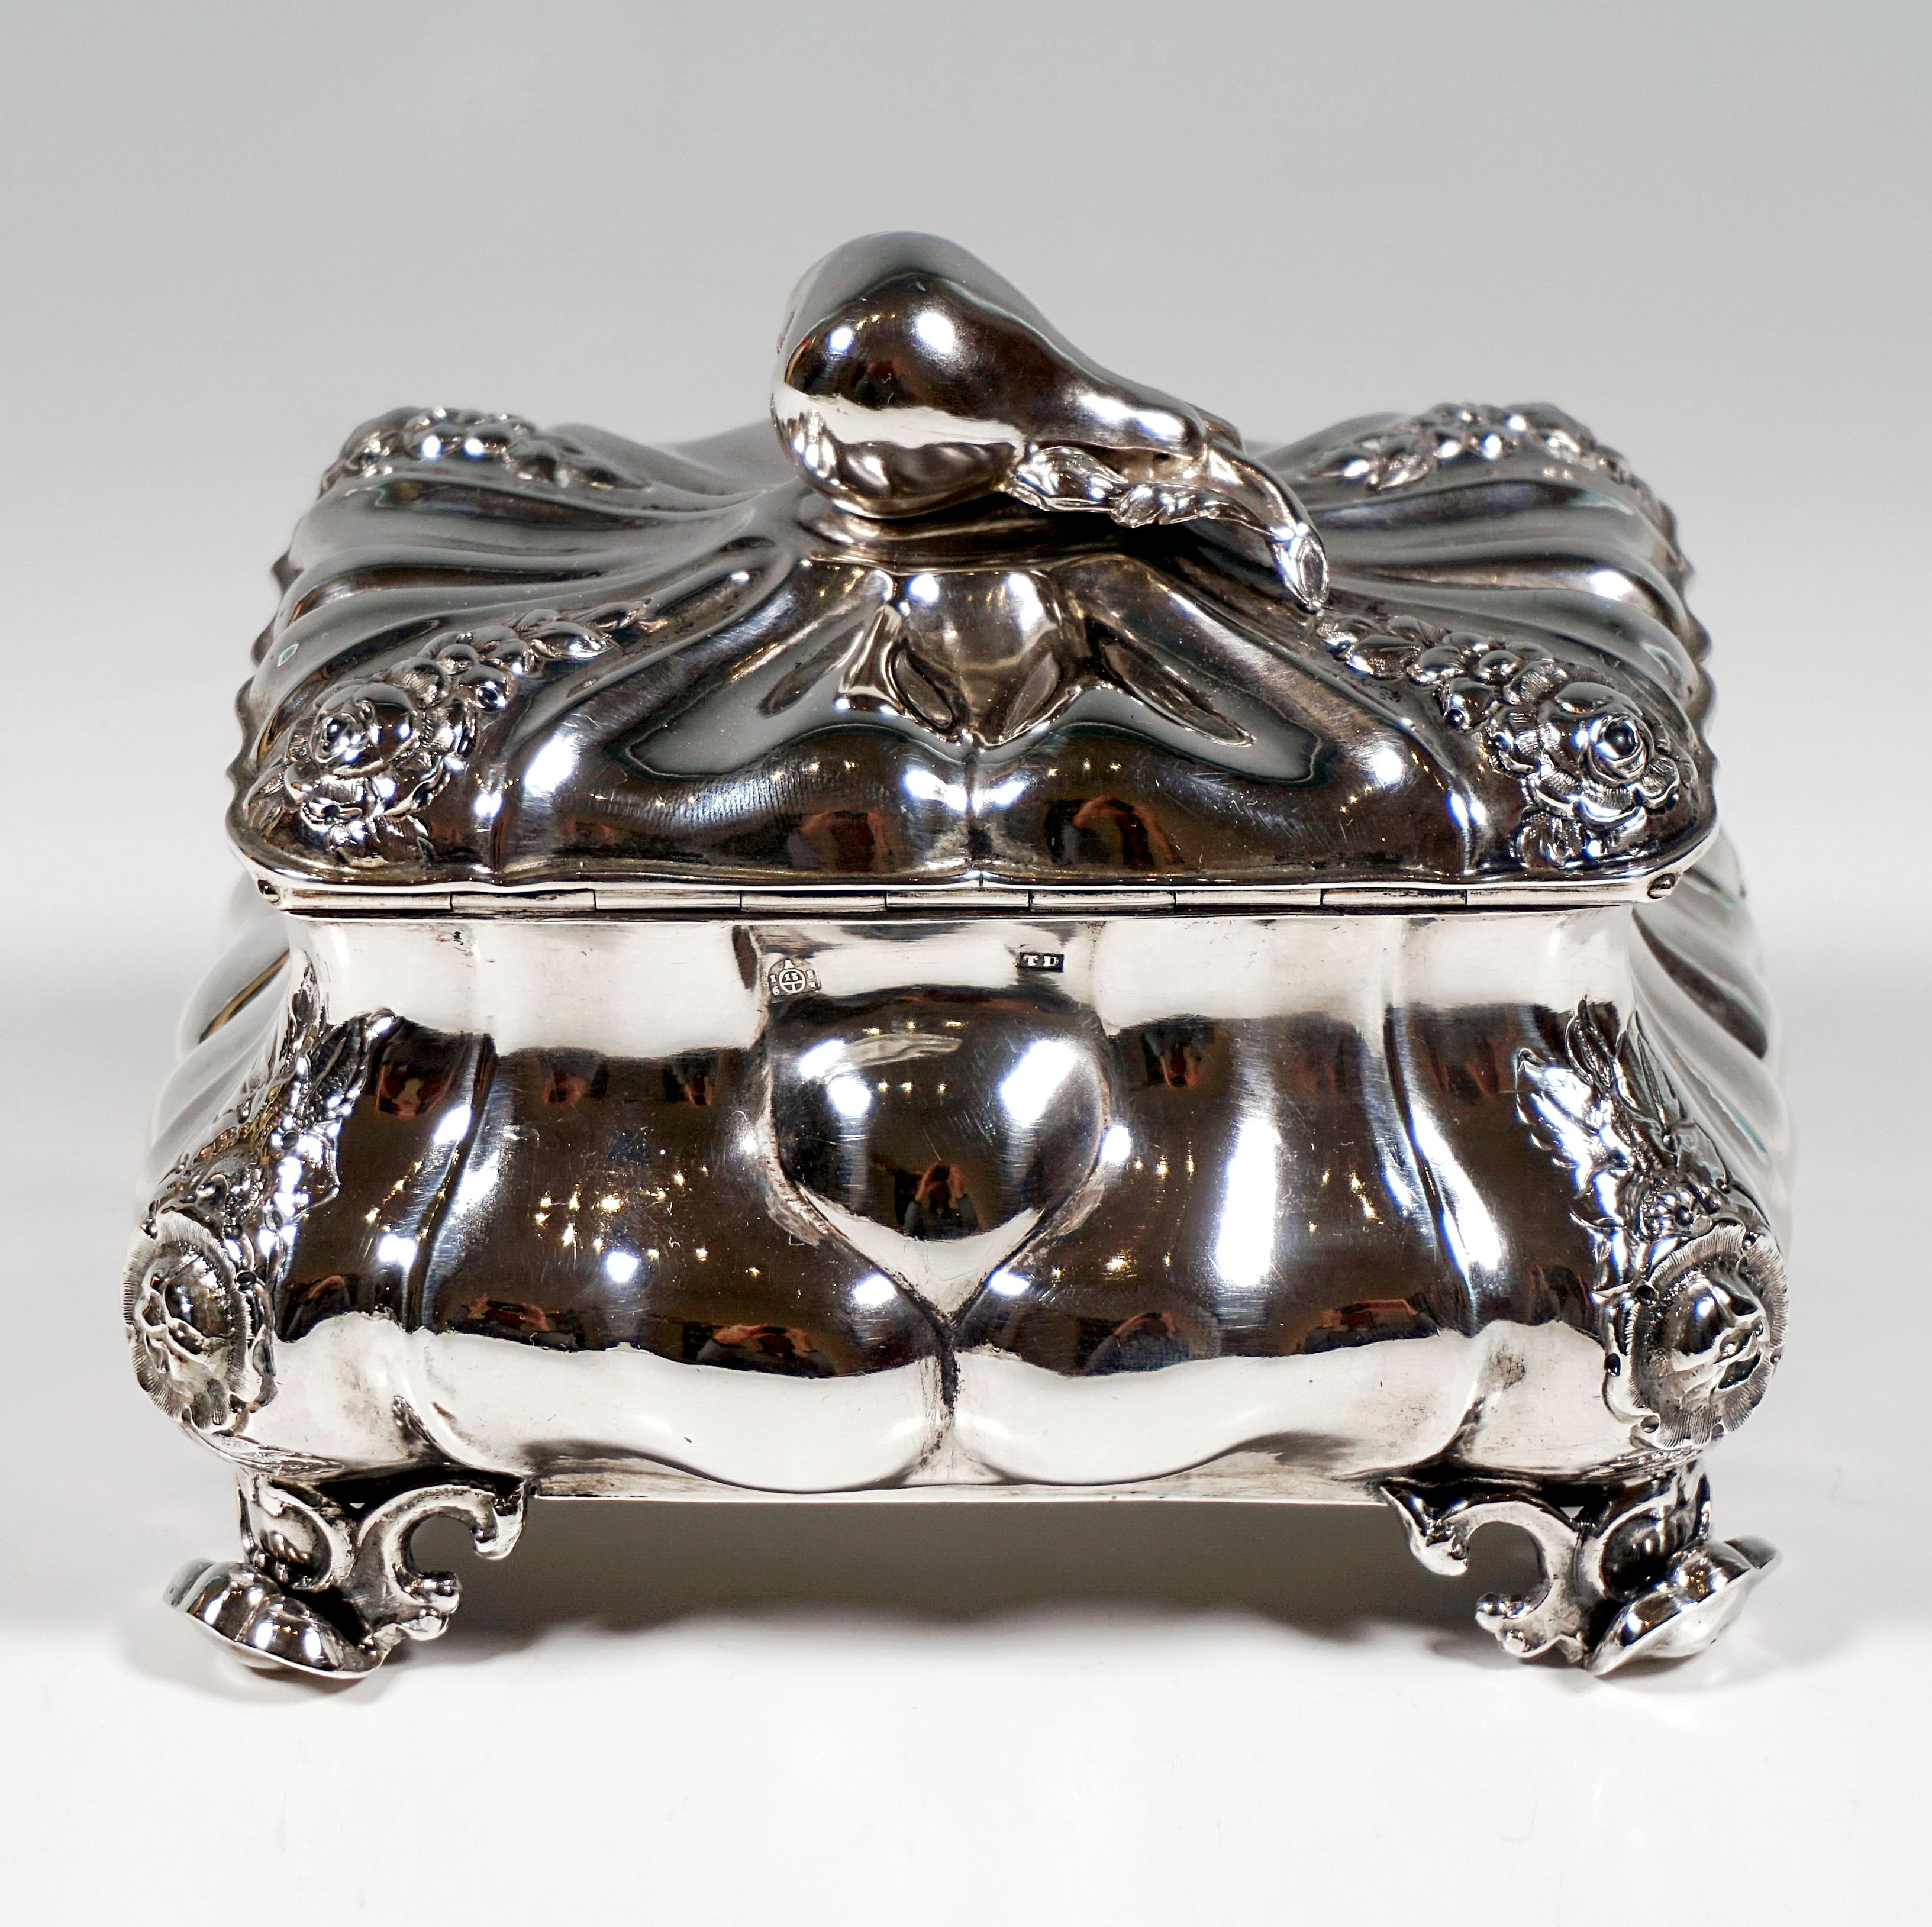 Hand-Crafted Antique Vienna Biedermeier Silver Sugar Box With Pear Knob, by Thomas Dub, 1863 For Sale